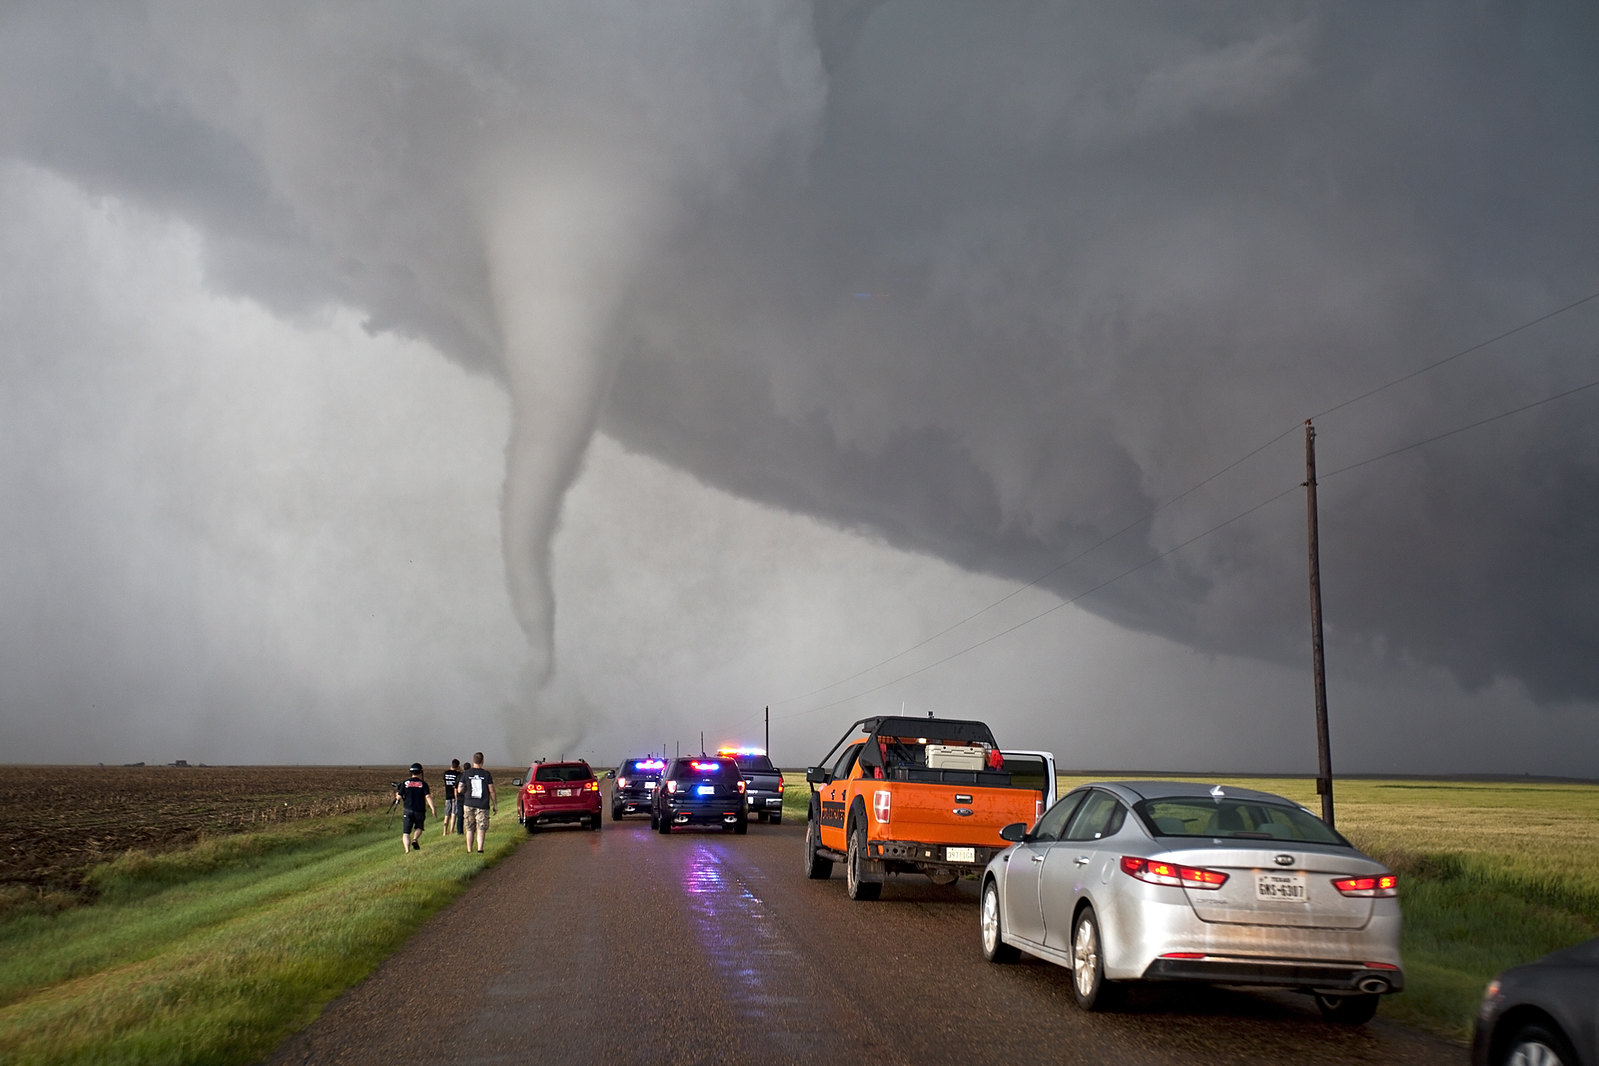 Annual Tornadoes - ustornadoes.com.